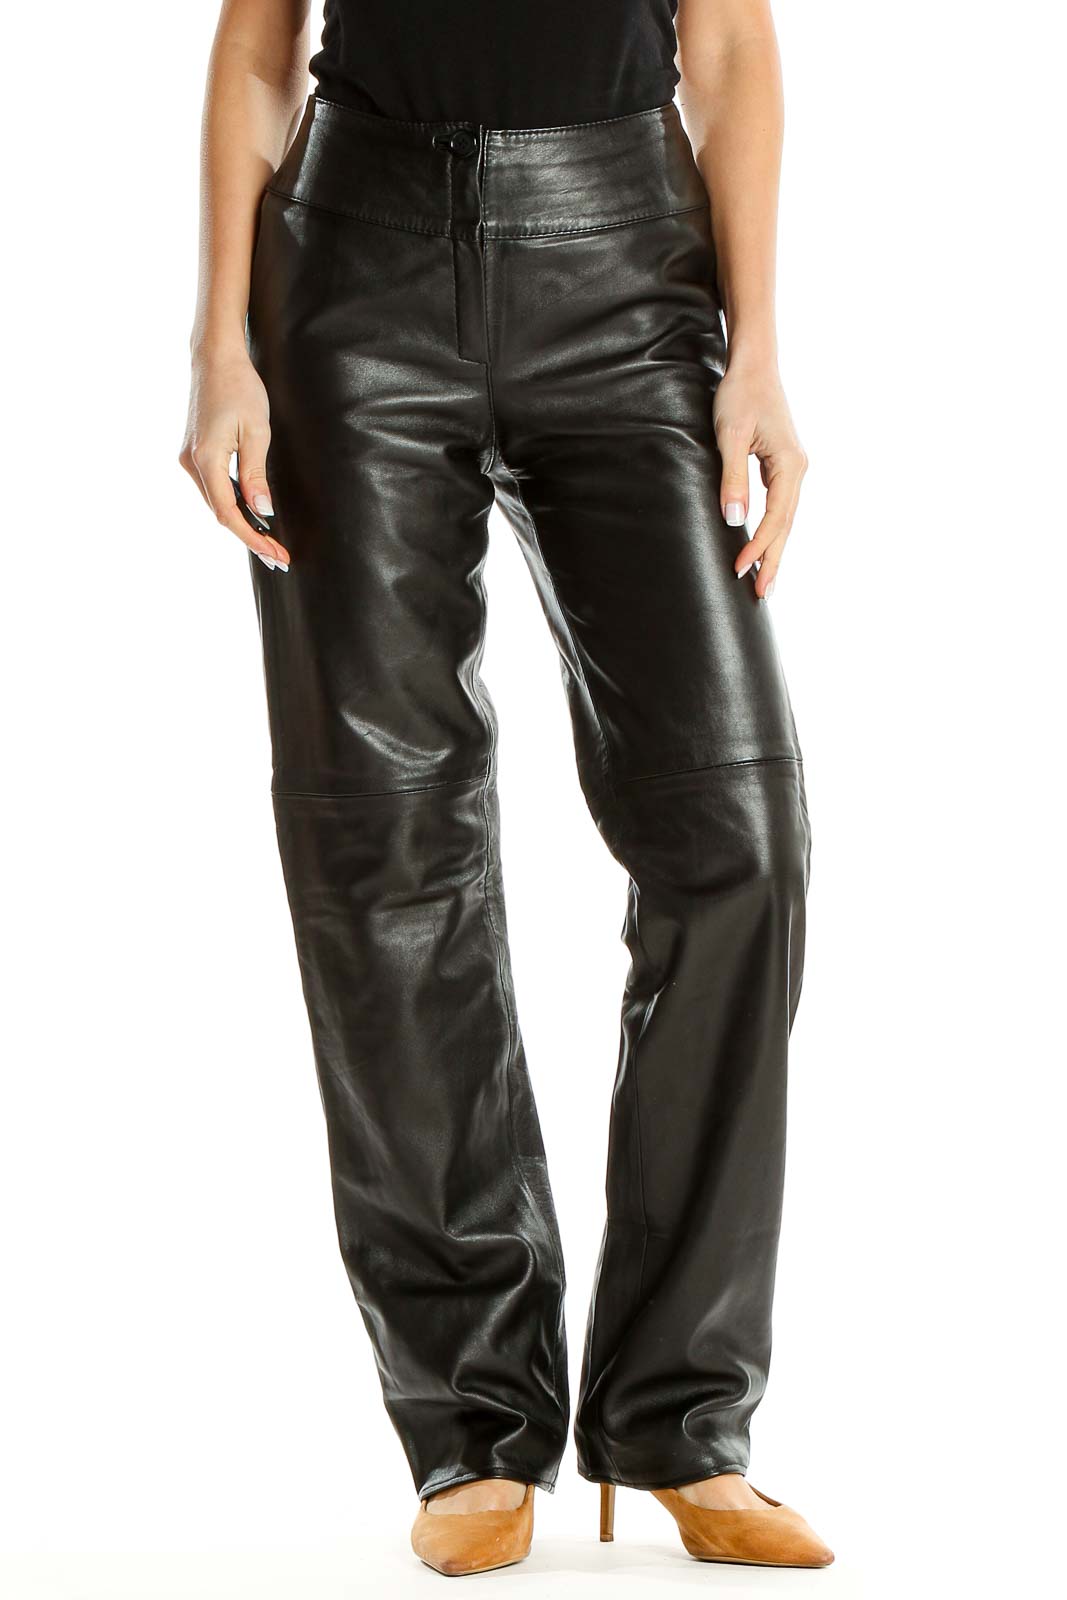 Black Leather Pants Front